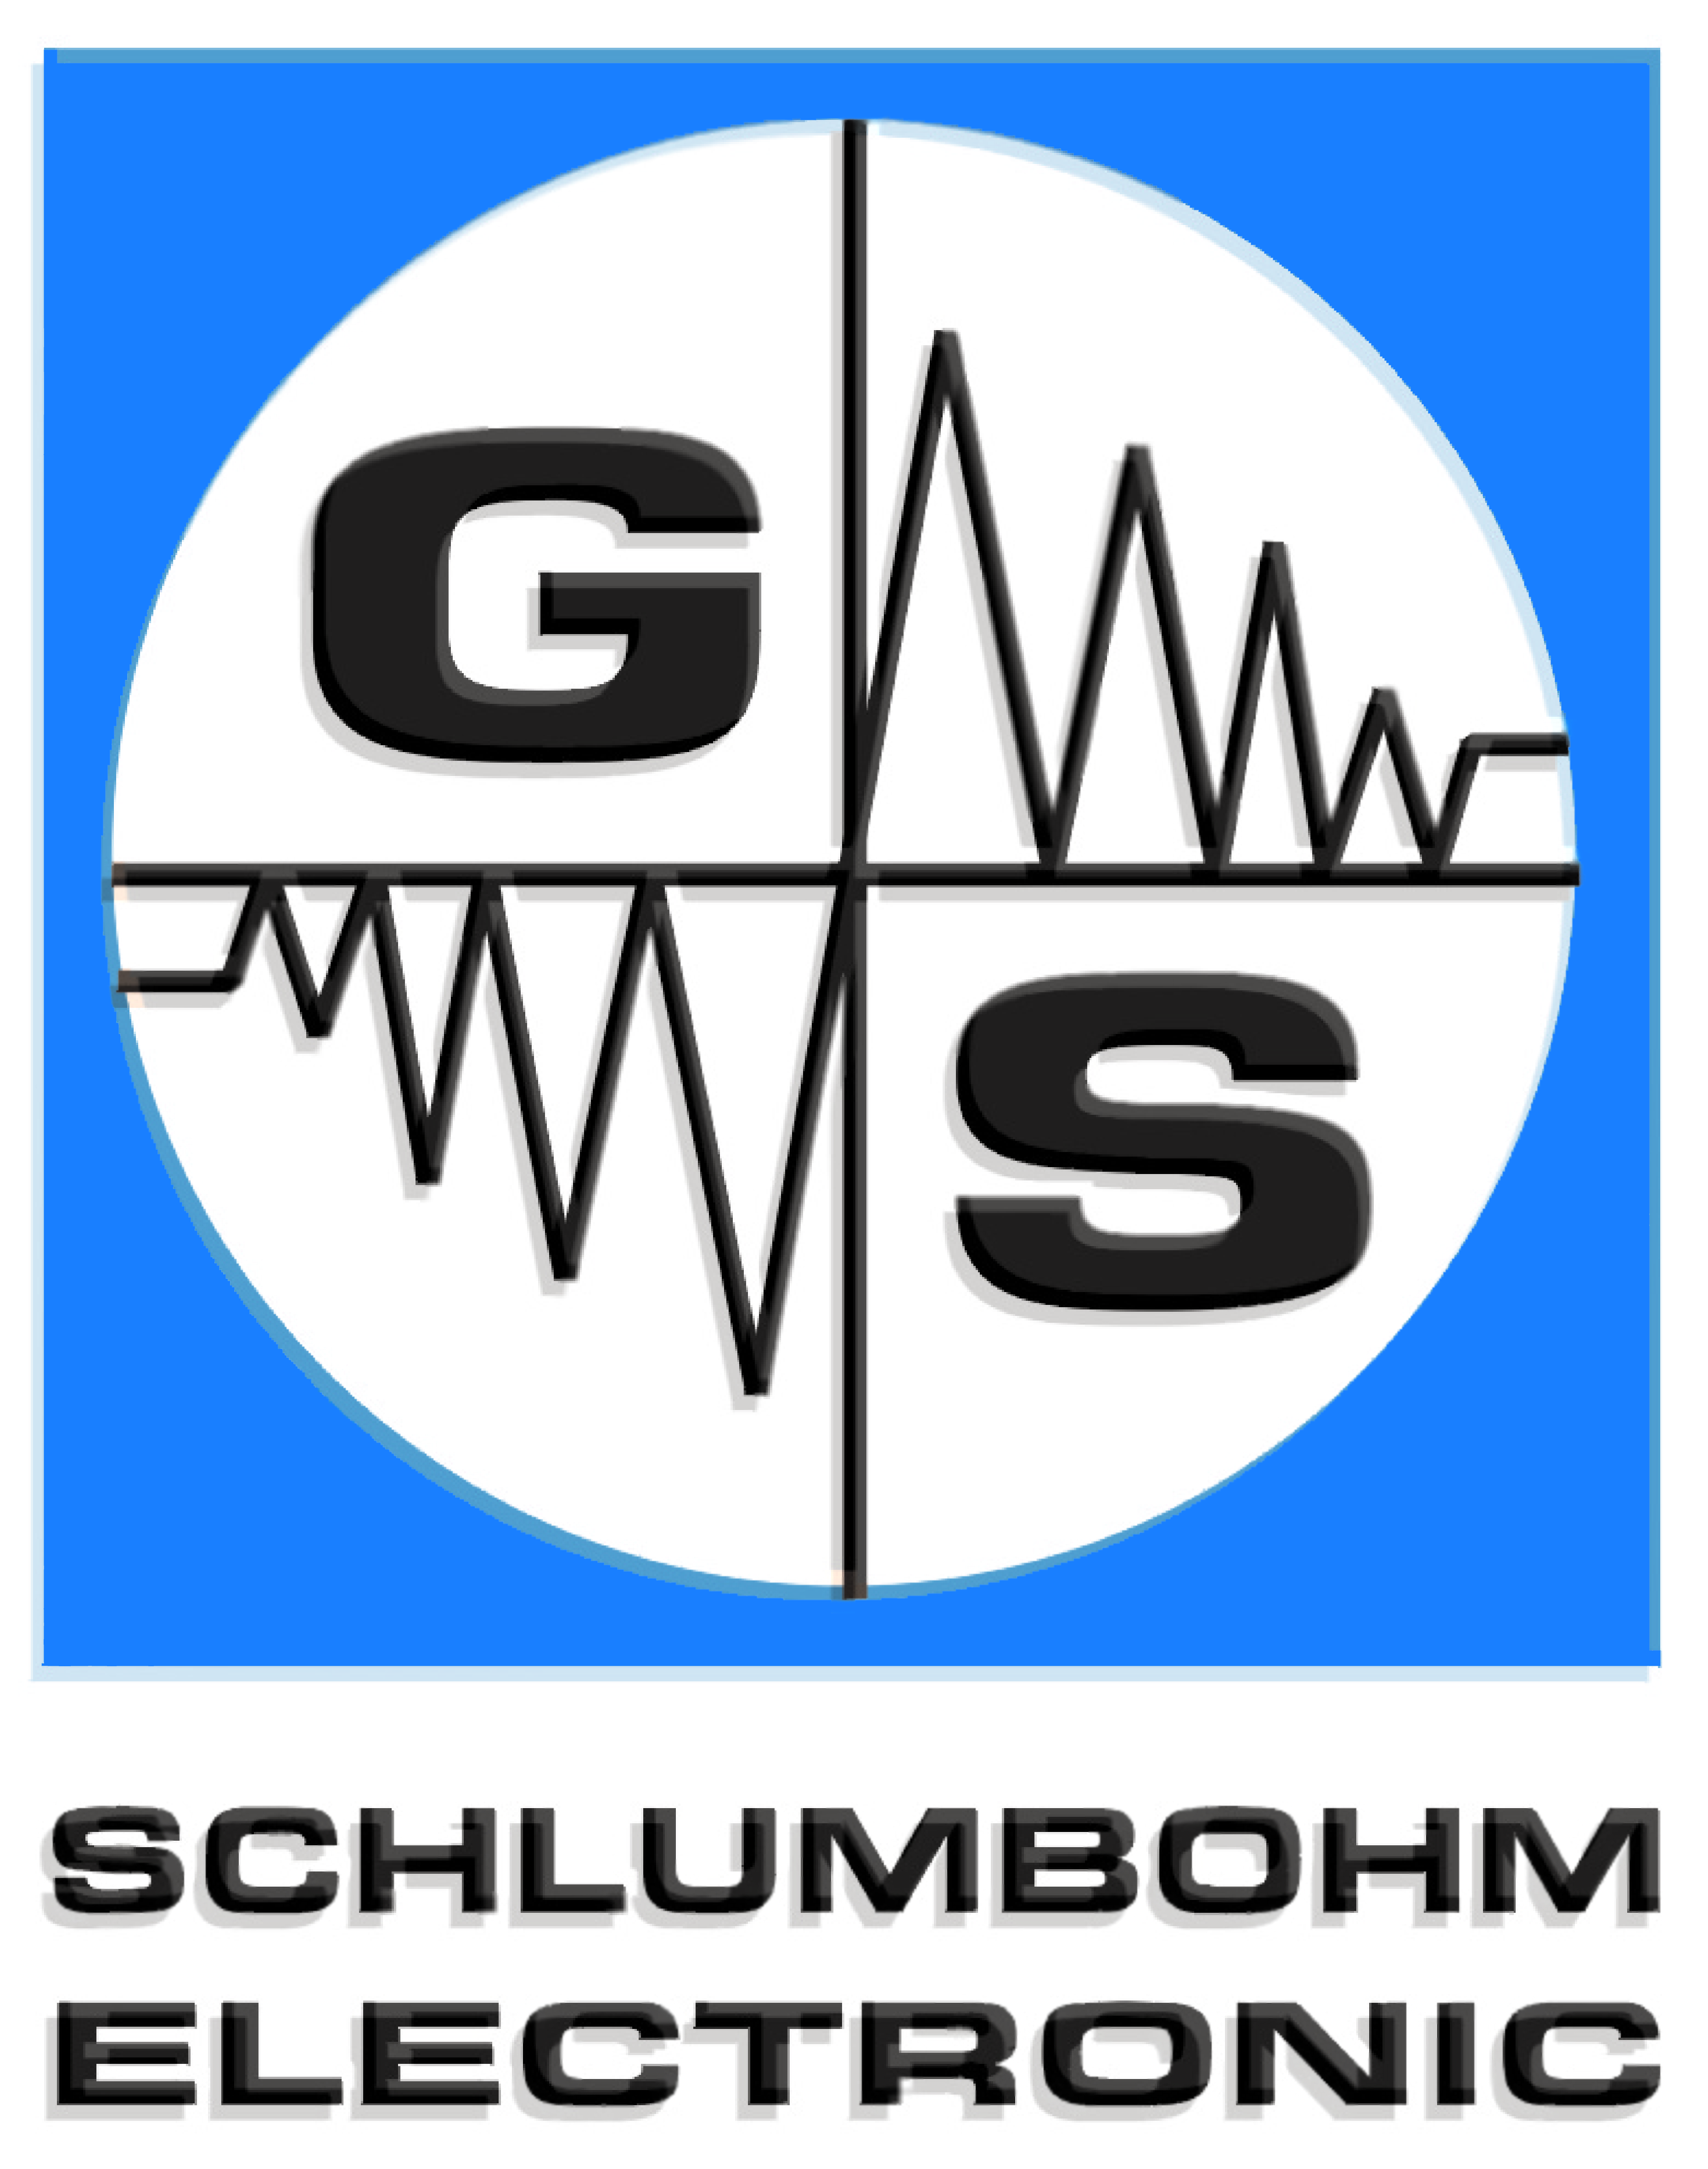 Schlumbohm